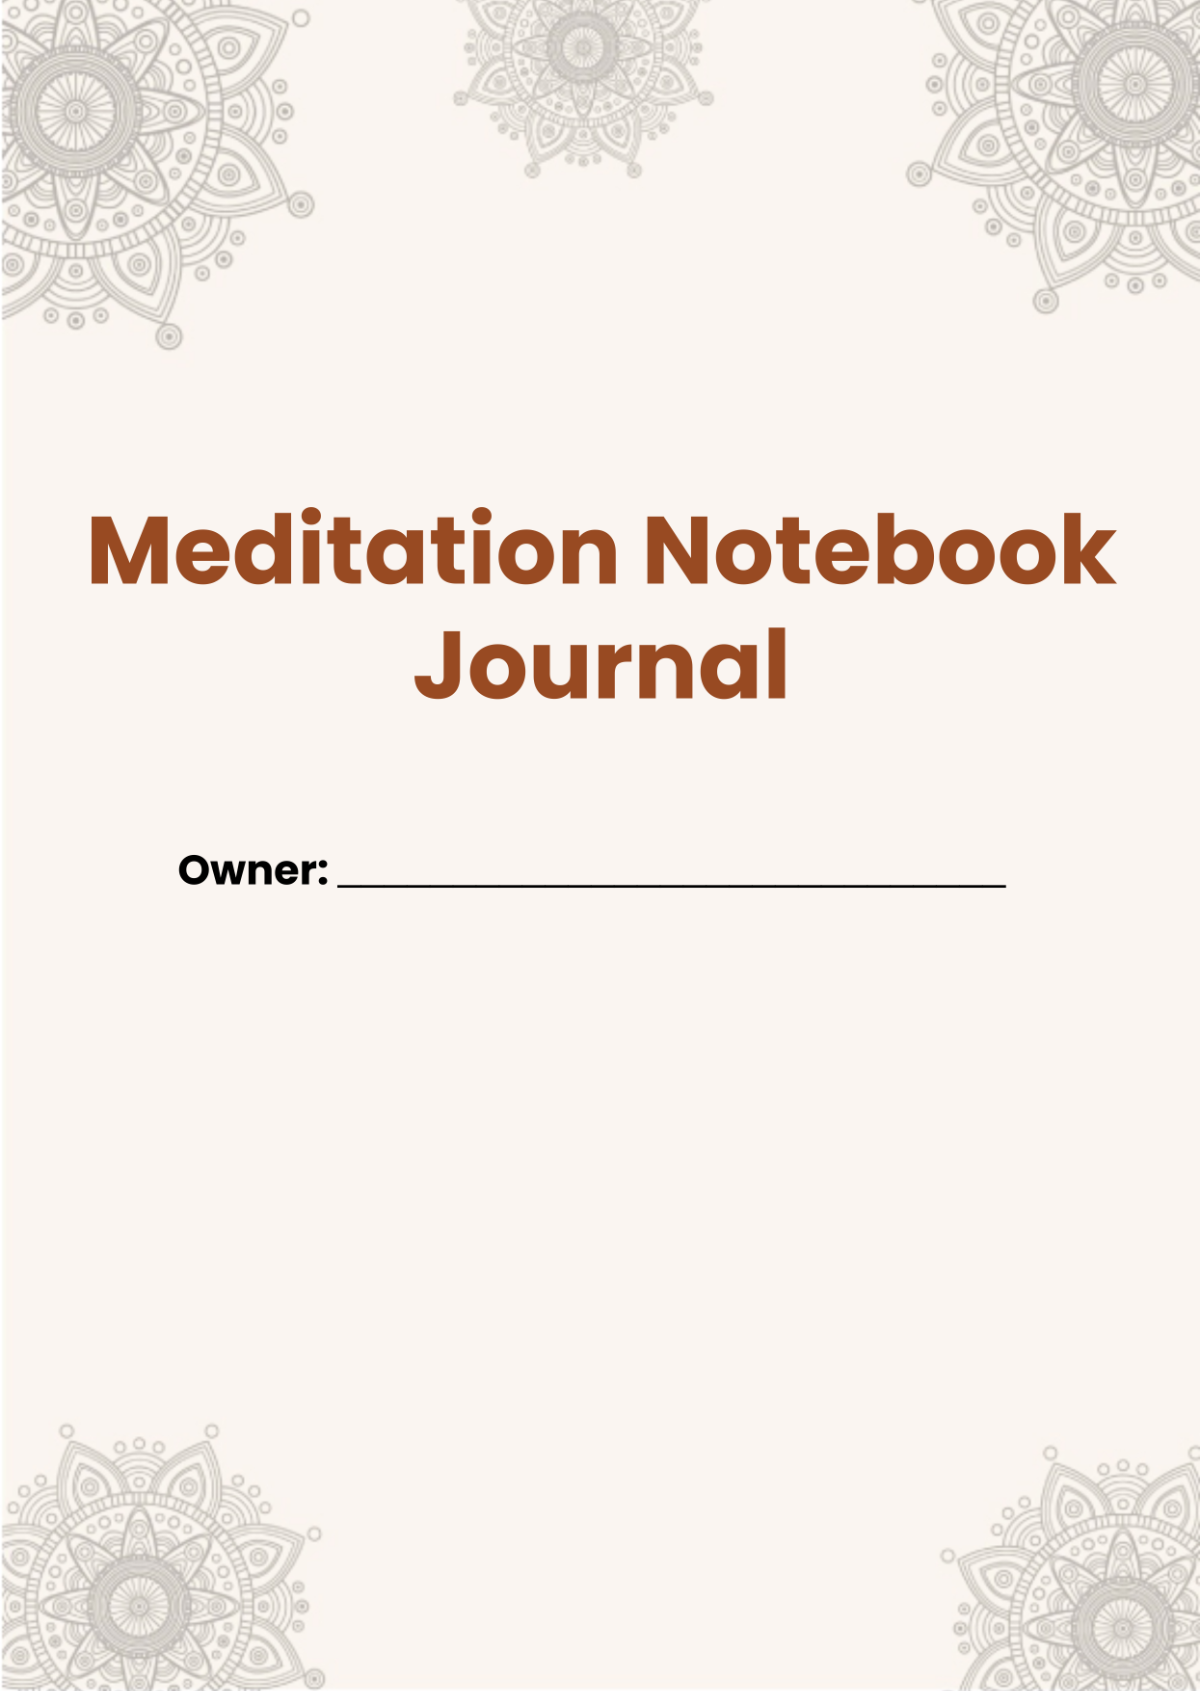 Free Meditation Notebook Journals